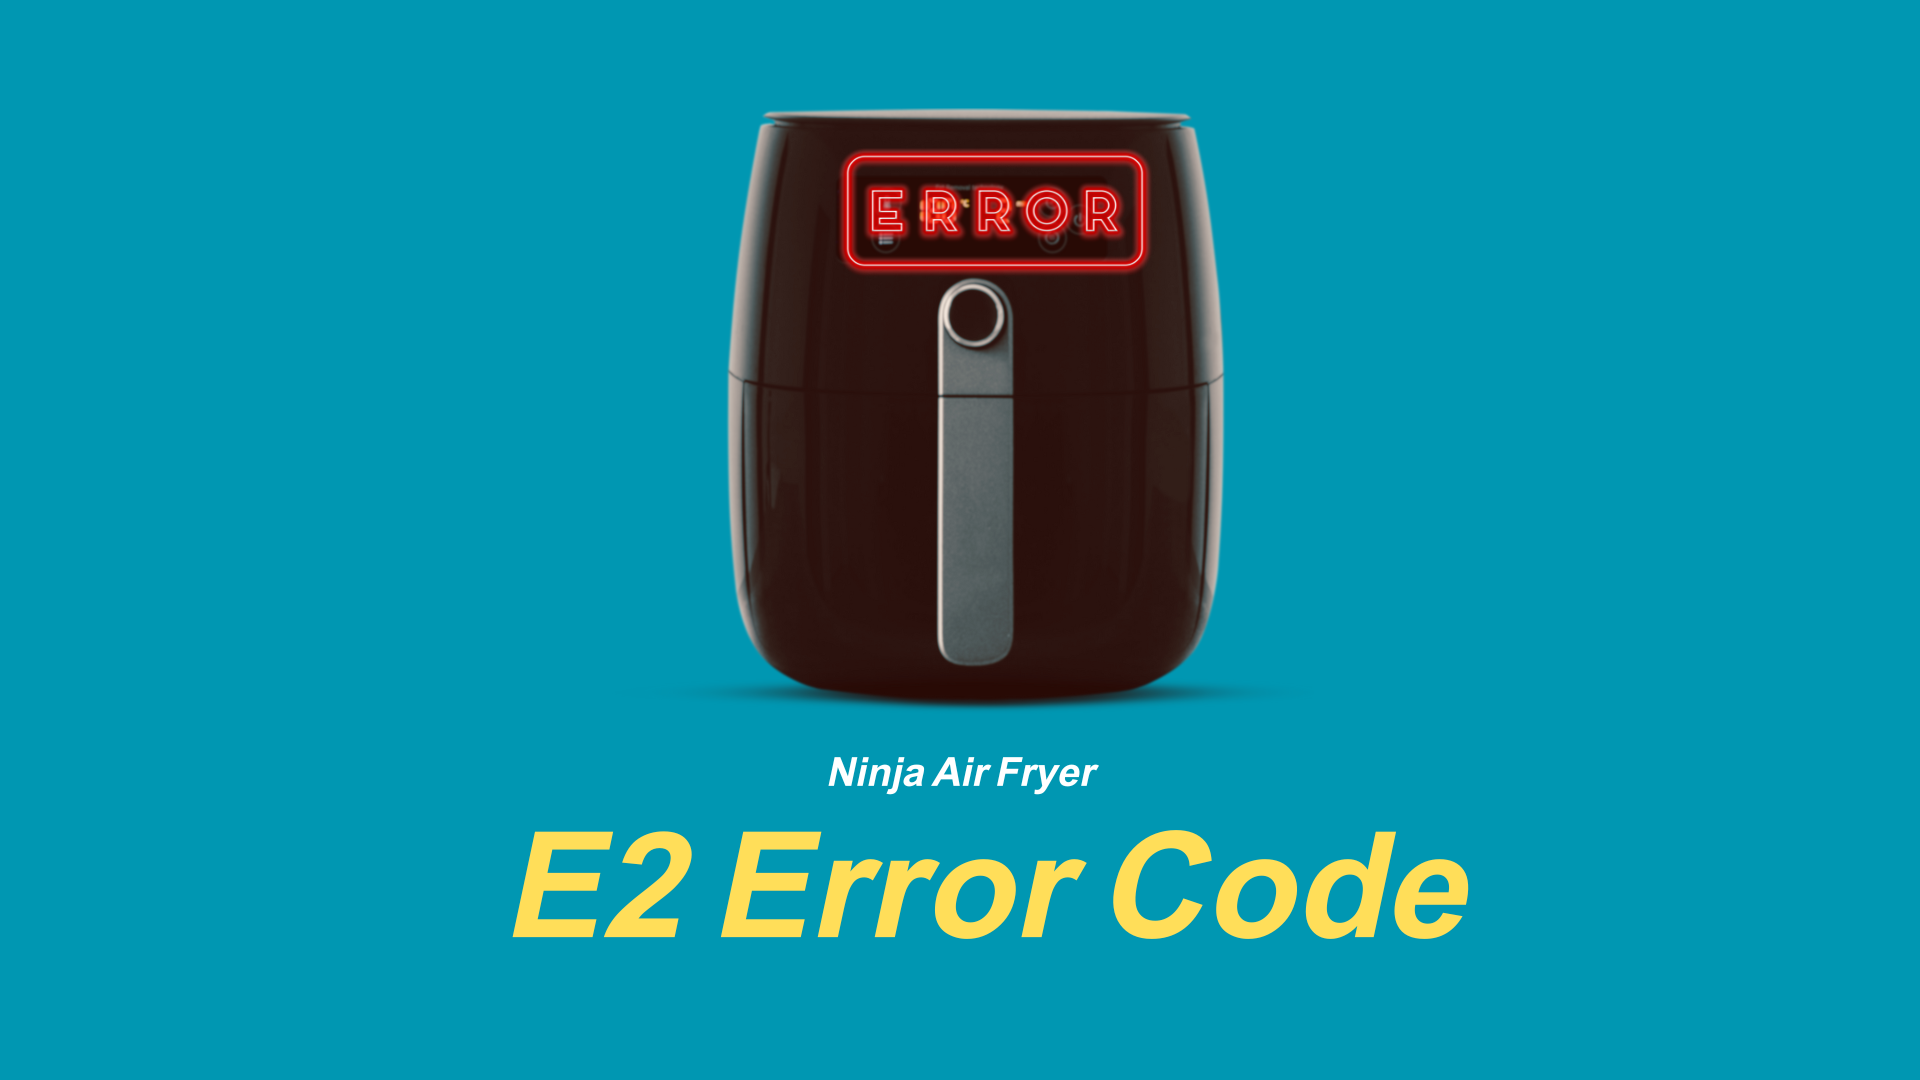 Ninja Air Fryer E2 Error Code